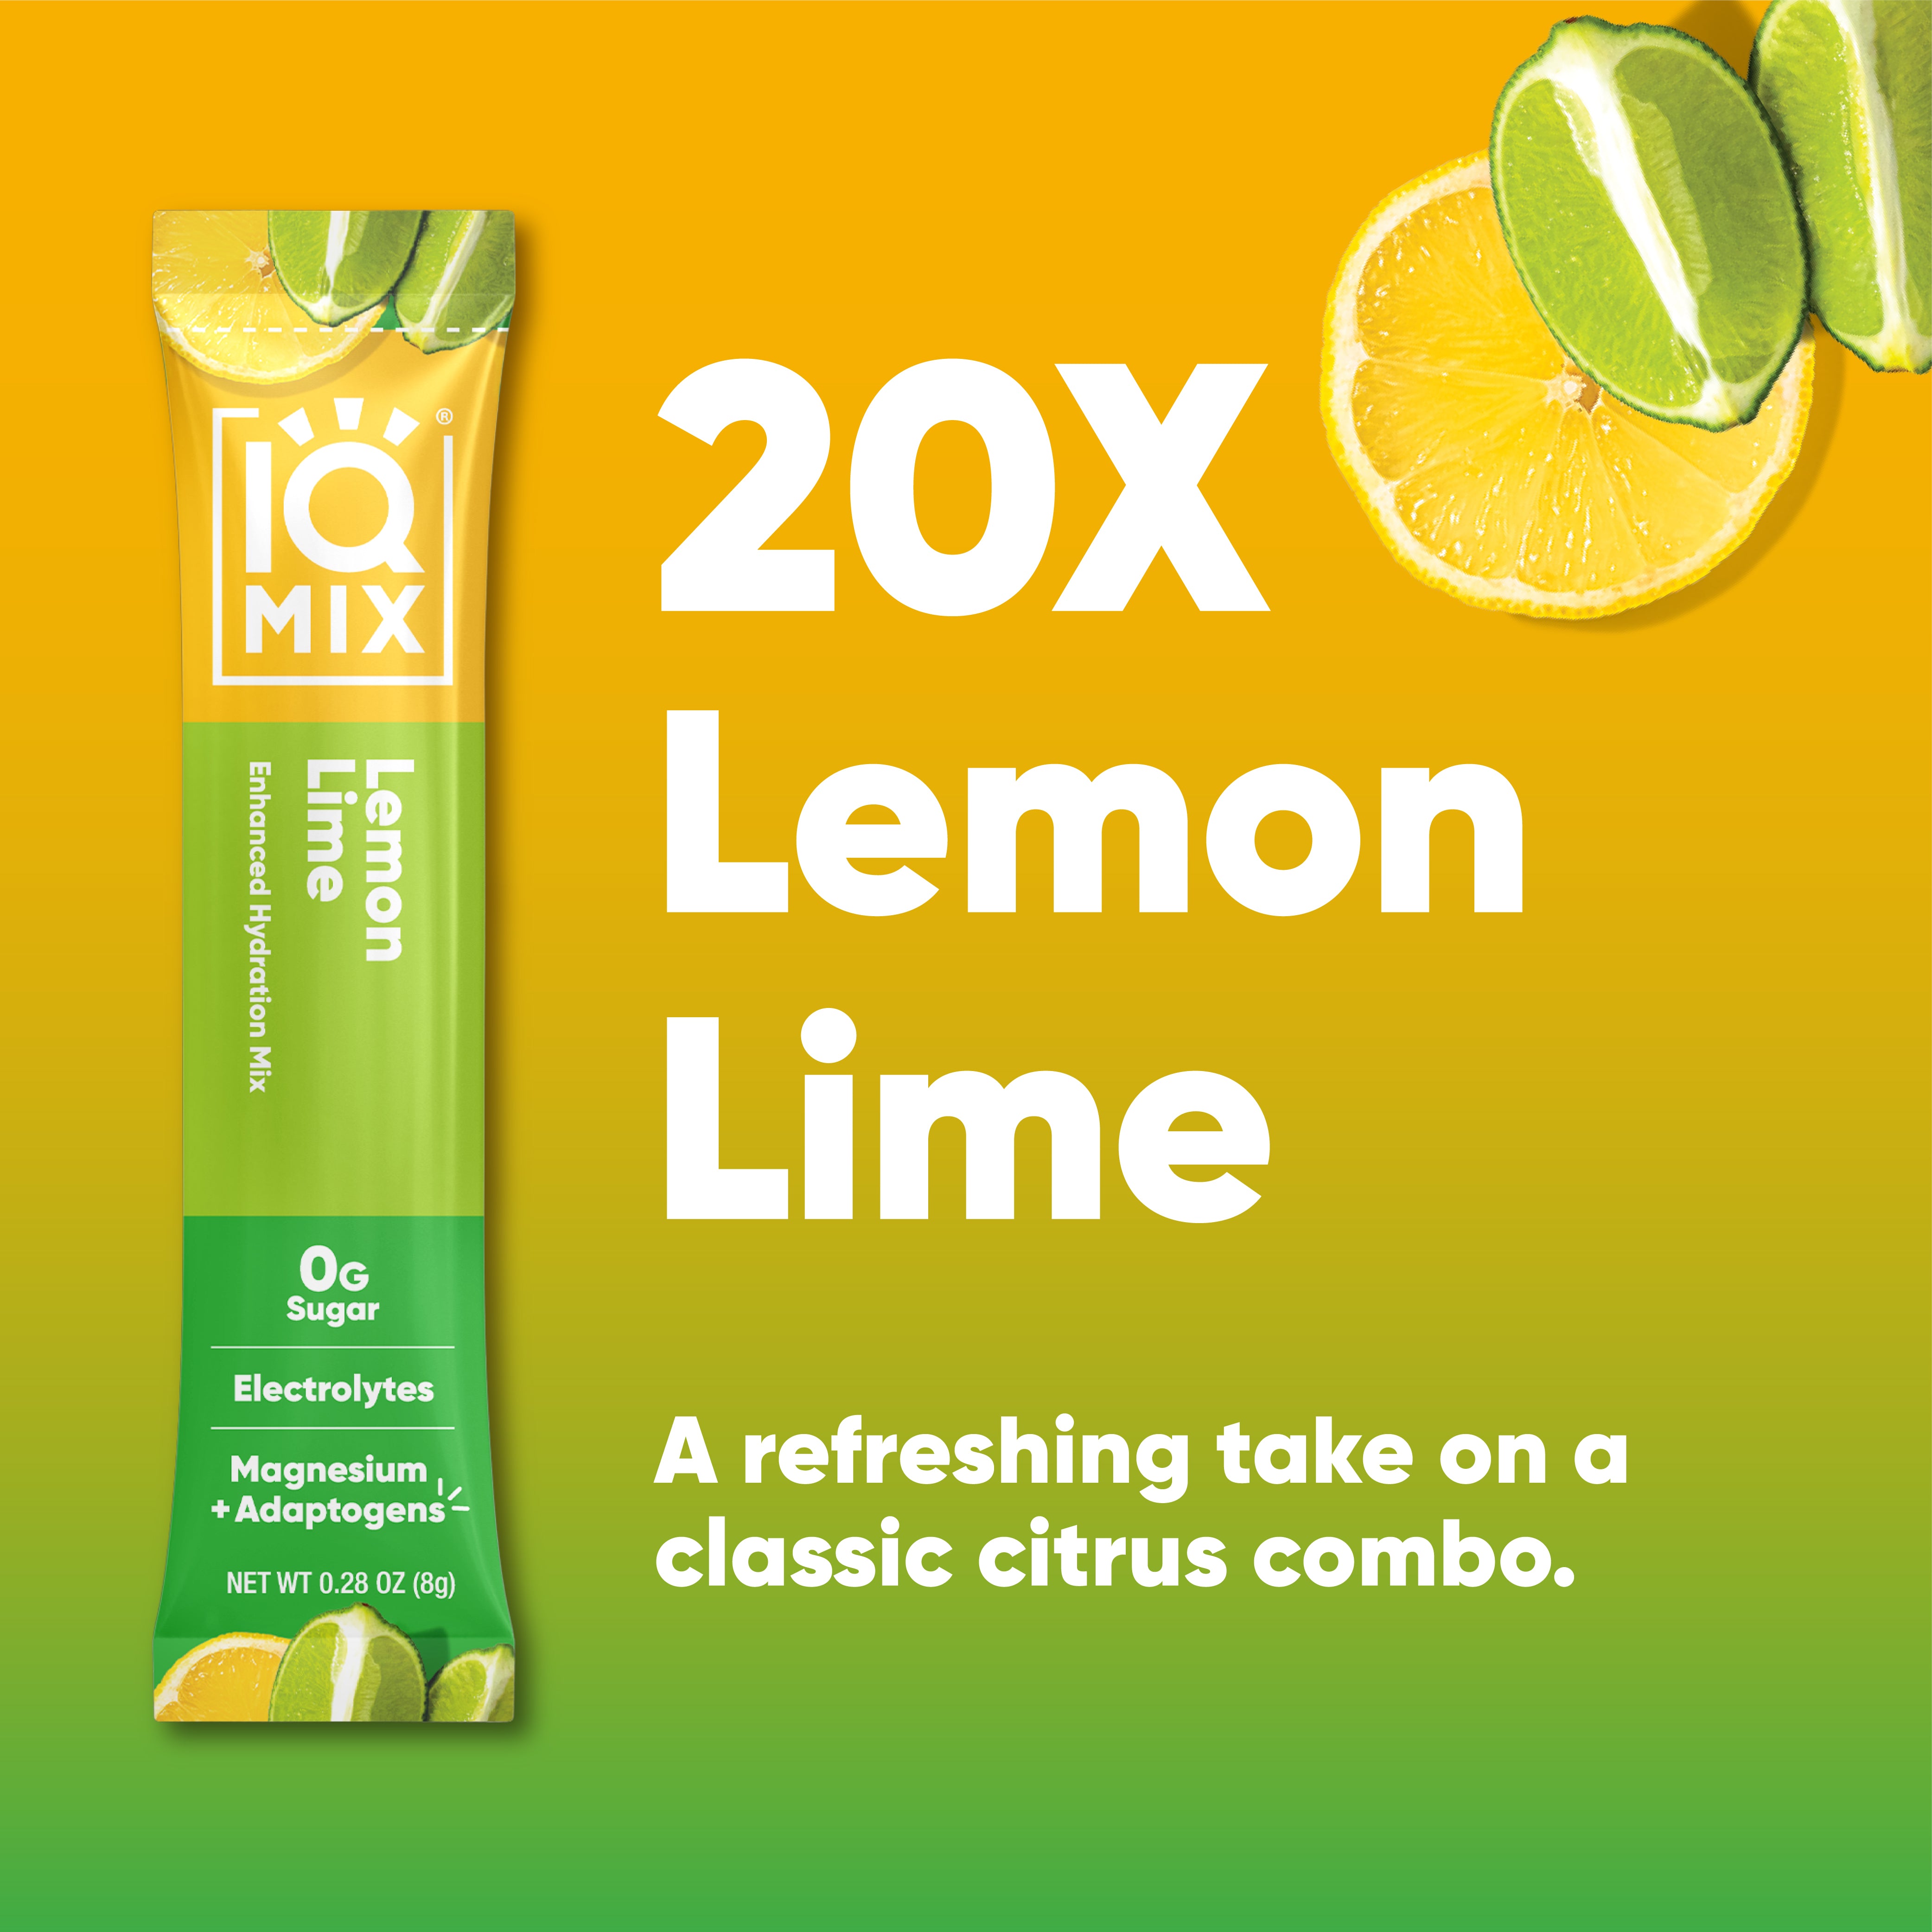 Lemon Lime (20 Sticks)